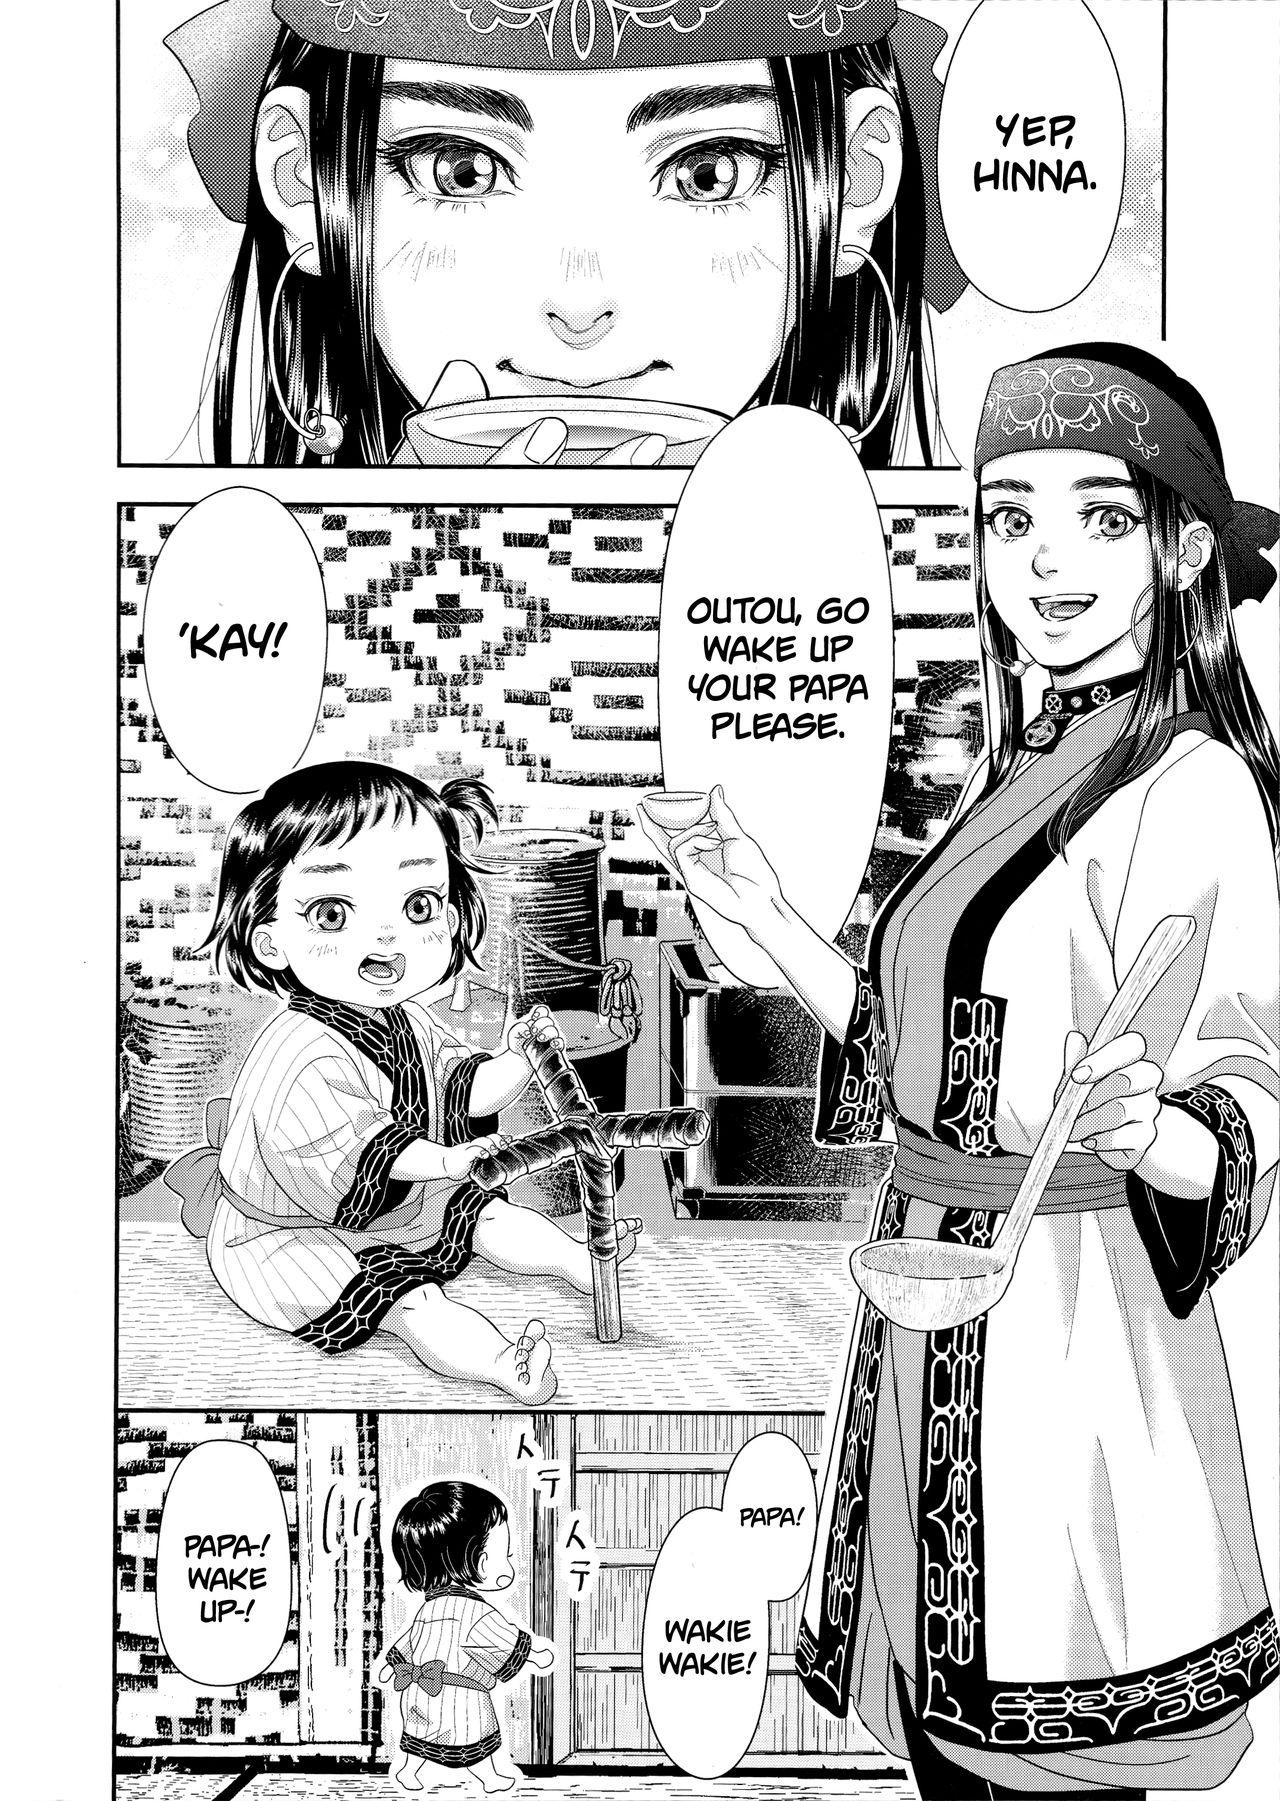 Large Sugimoto Ikka/Sugimoto's Household - Golden kamuy Girlfriends - Page 4